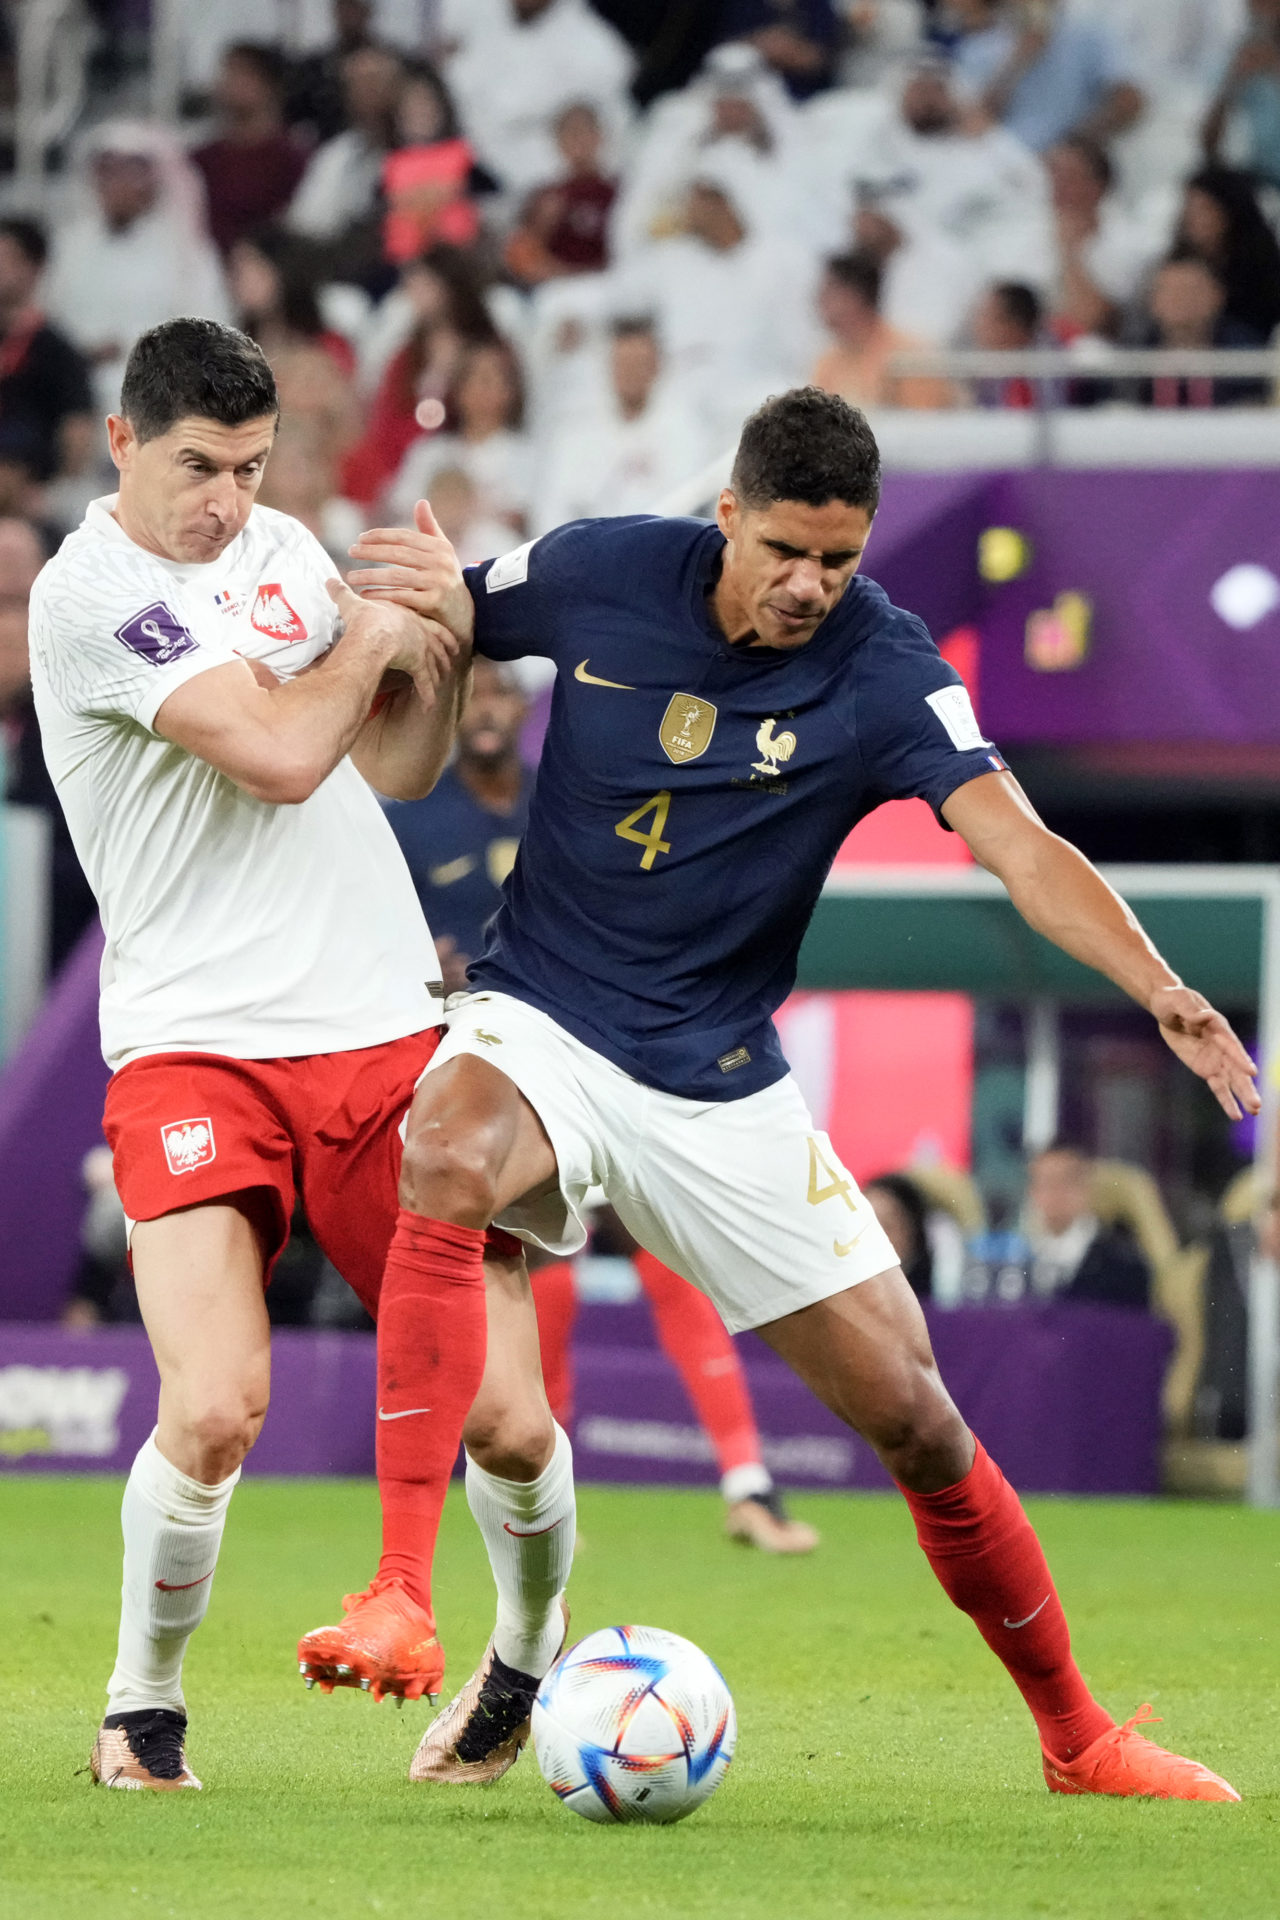 Francja v Polska: 1/8 finału - Mistrzostwa Świata FIFA Katar 2022